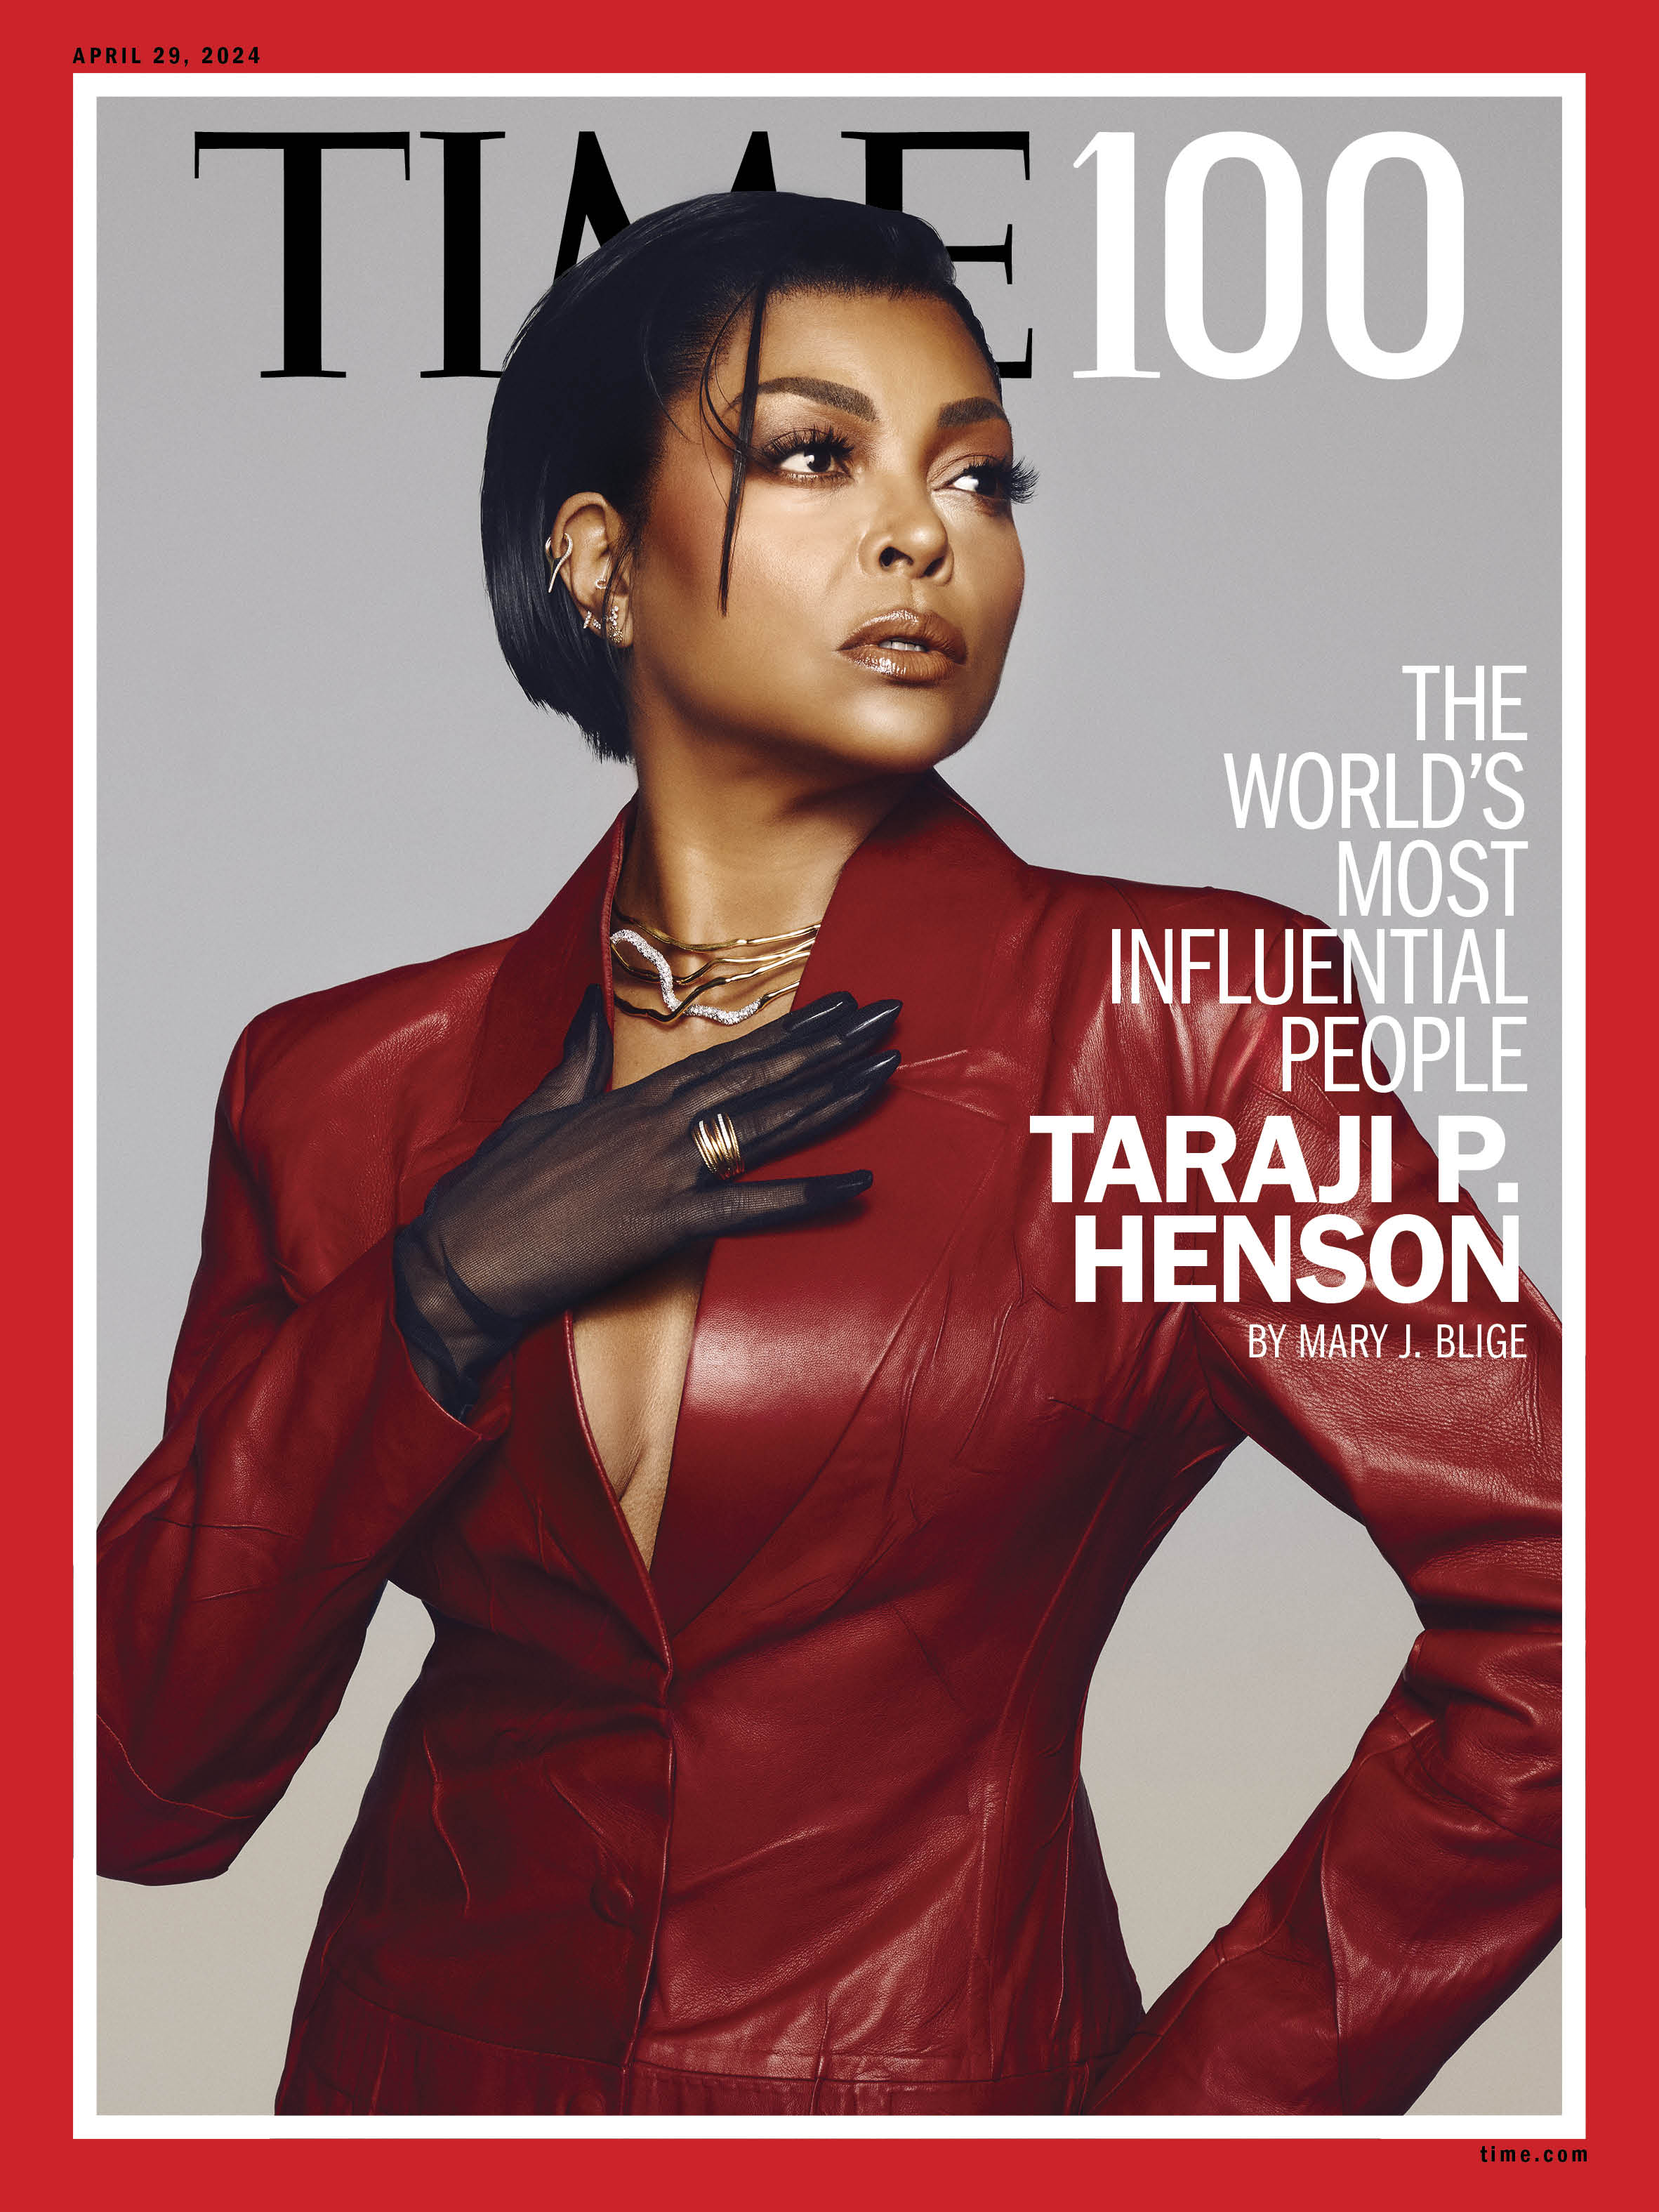 #TIME100 Taraji P. Henson, 21 Savage, Colman Domingo, Da’Vine Joy Randolph And More Make ‘Most Influential People’ List